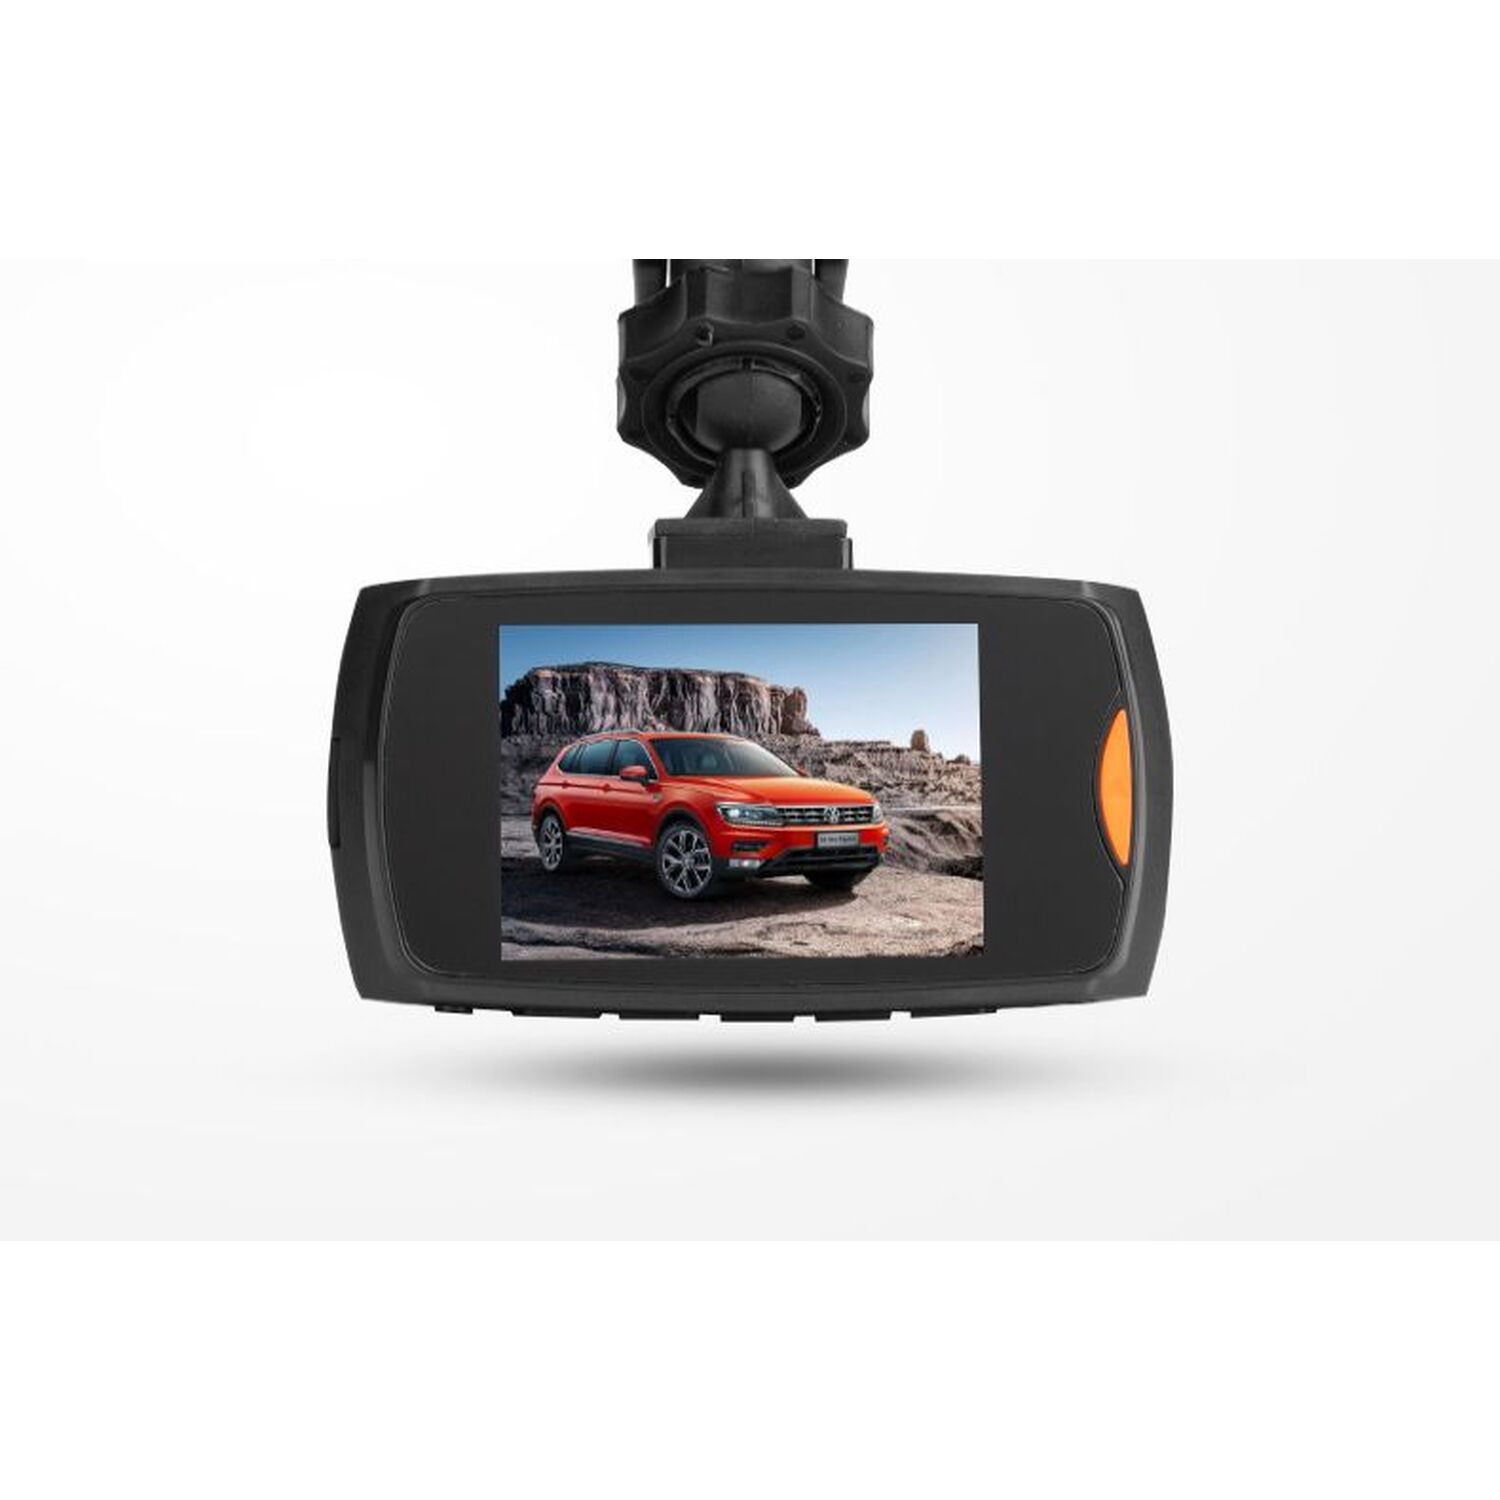 HD Car Dash Camera with SD Card - Black Image 4